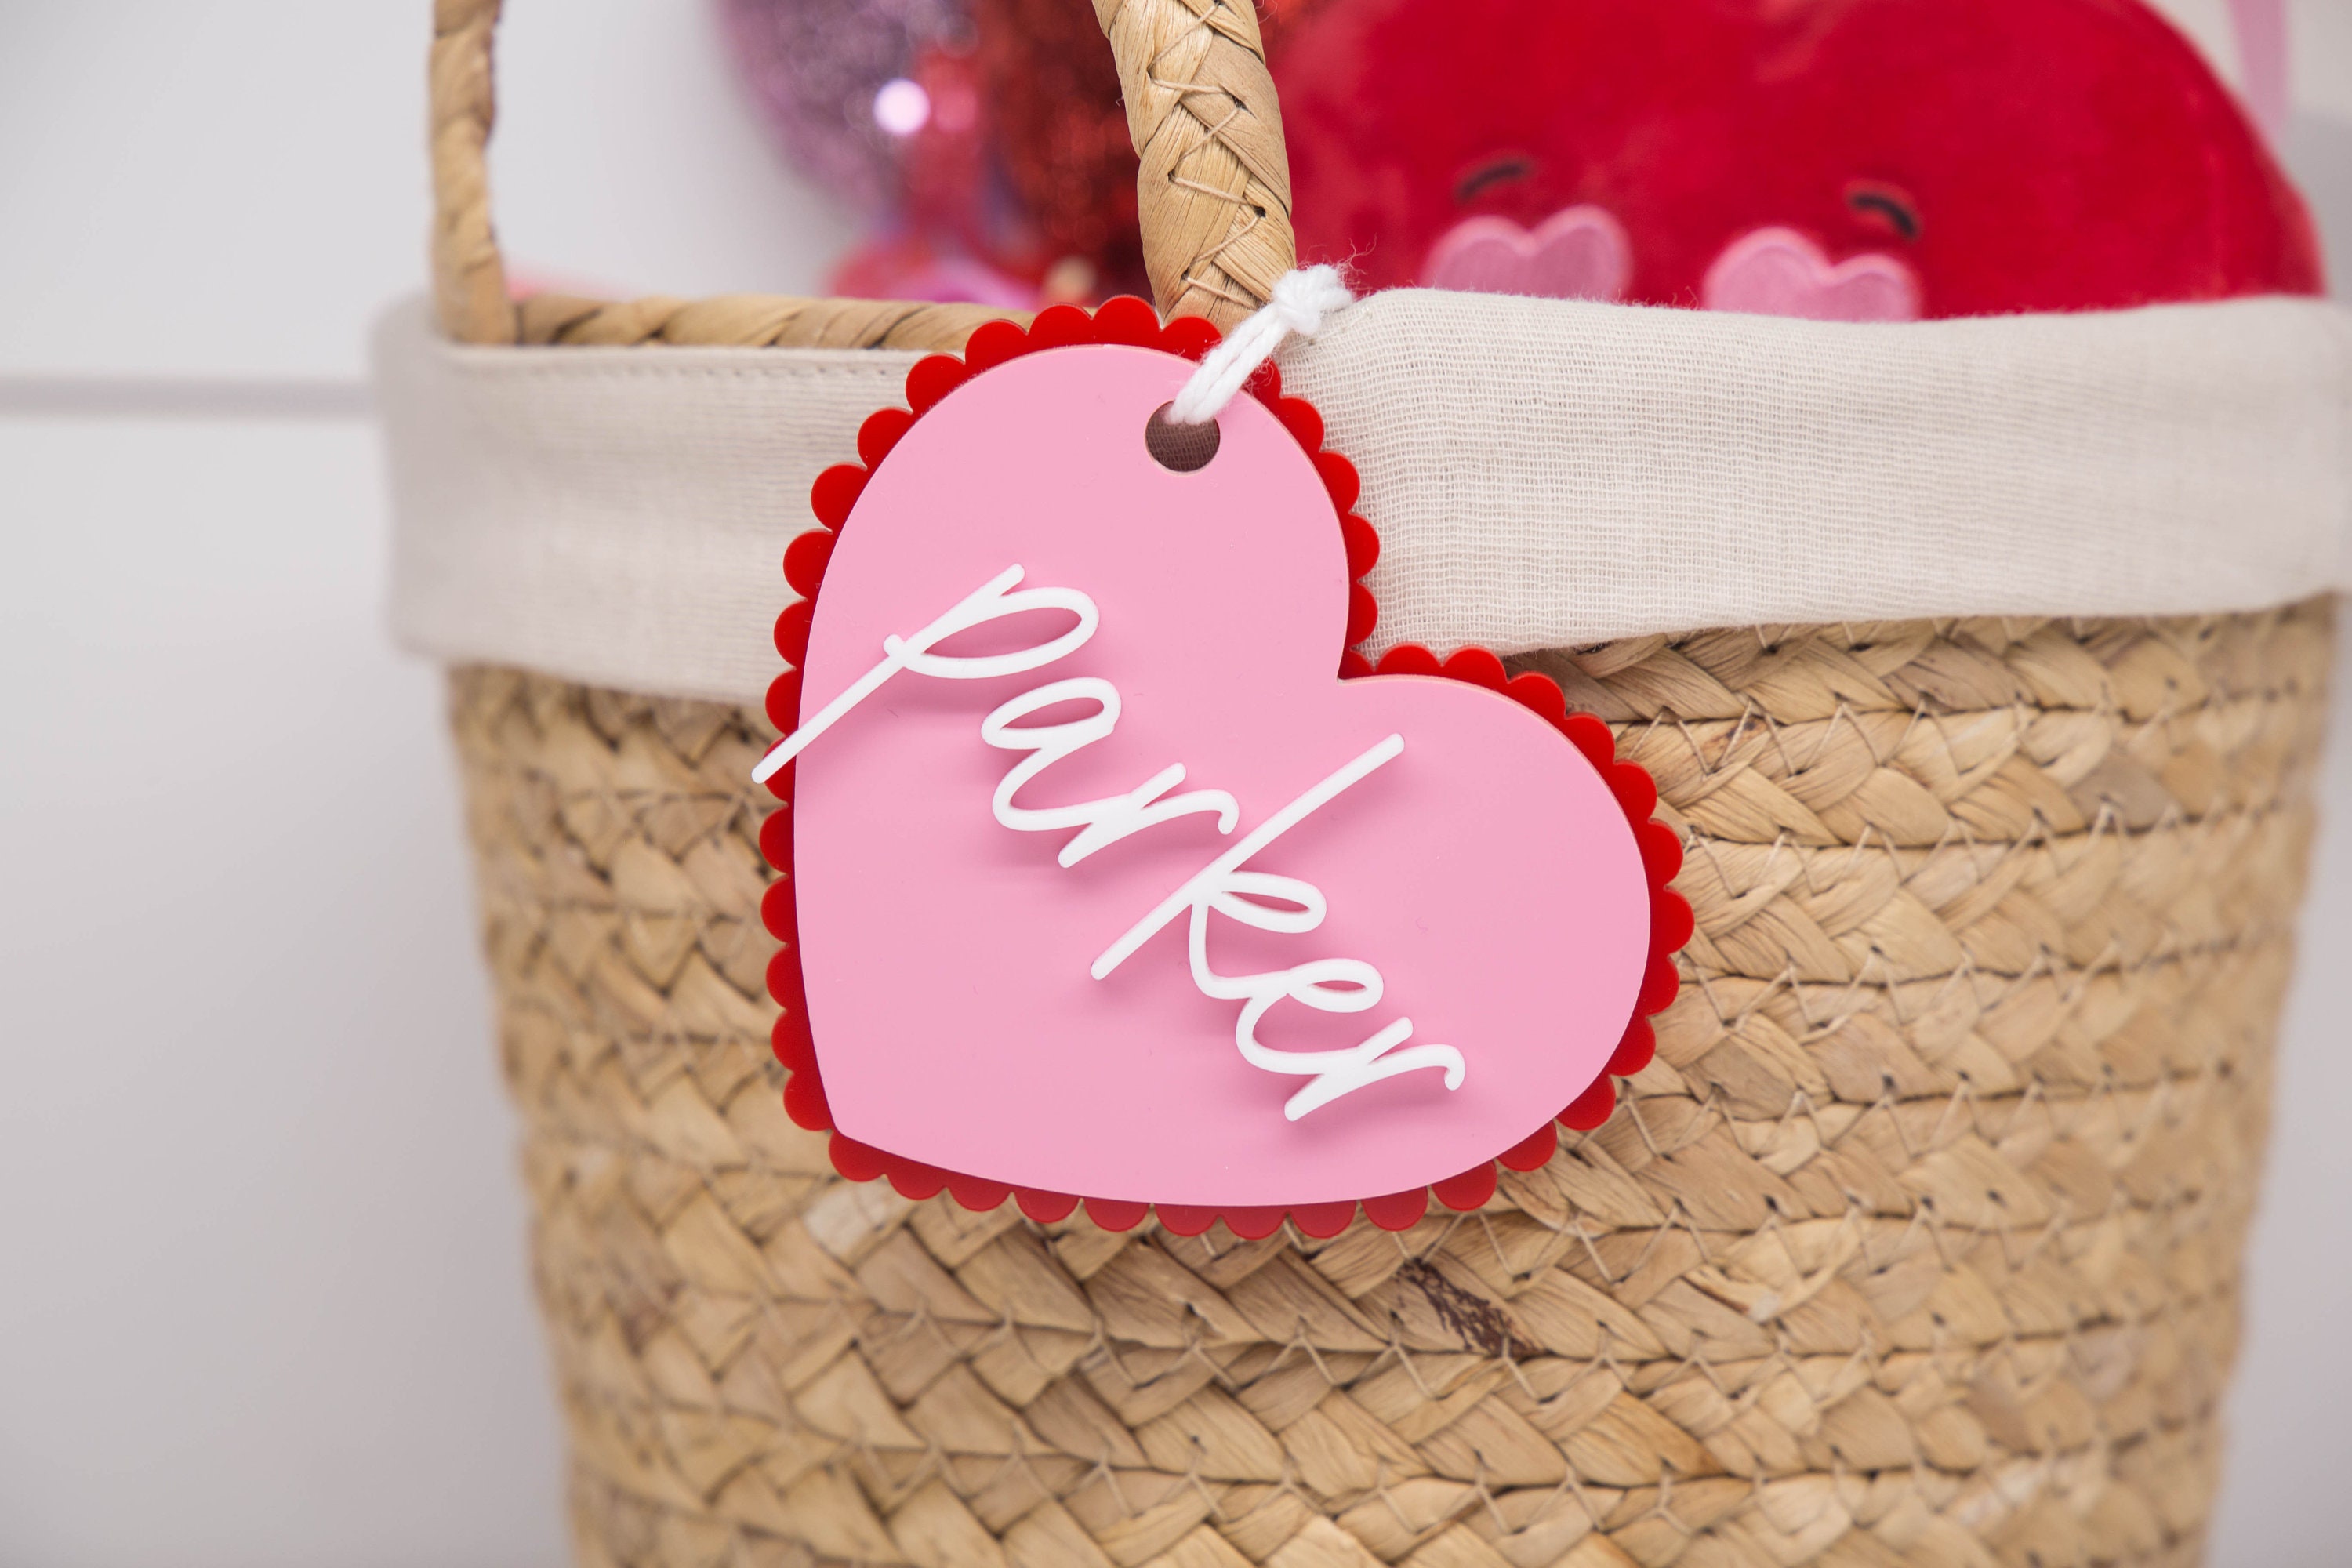 Valentines Day Gift Basket Premade Box Valentines Day Gifts for Her,  Him,Girlfriend, Boyfriend, Mom, Husband, Wife,Men, Friends, Teen, Military